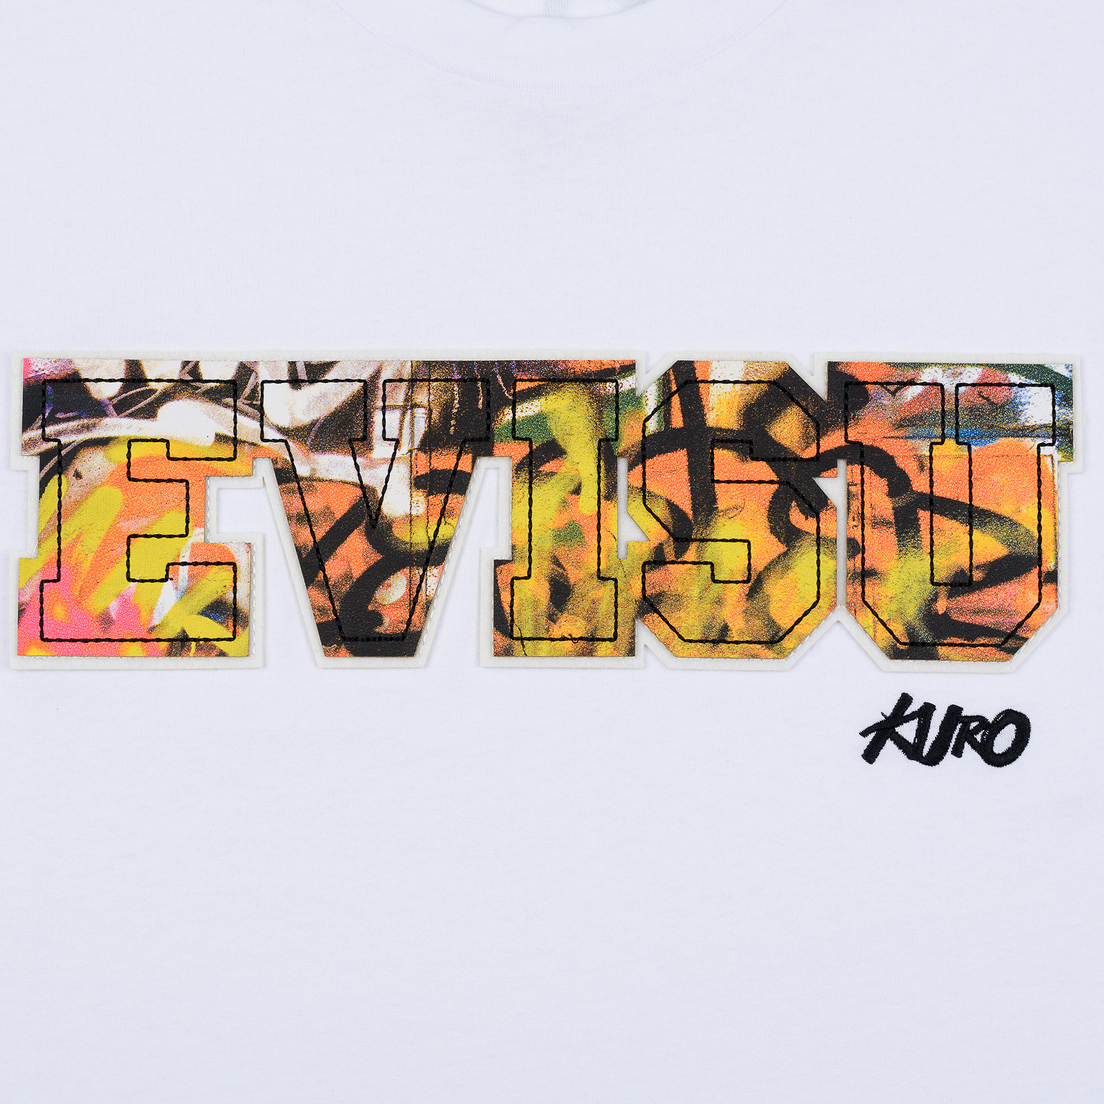 Evisu Мужская футболка Evisu Multicolor Graffiti Patchwork